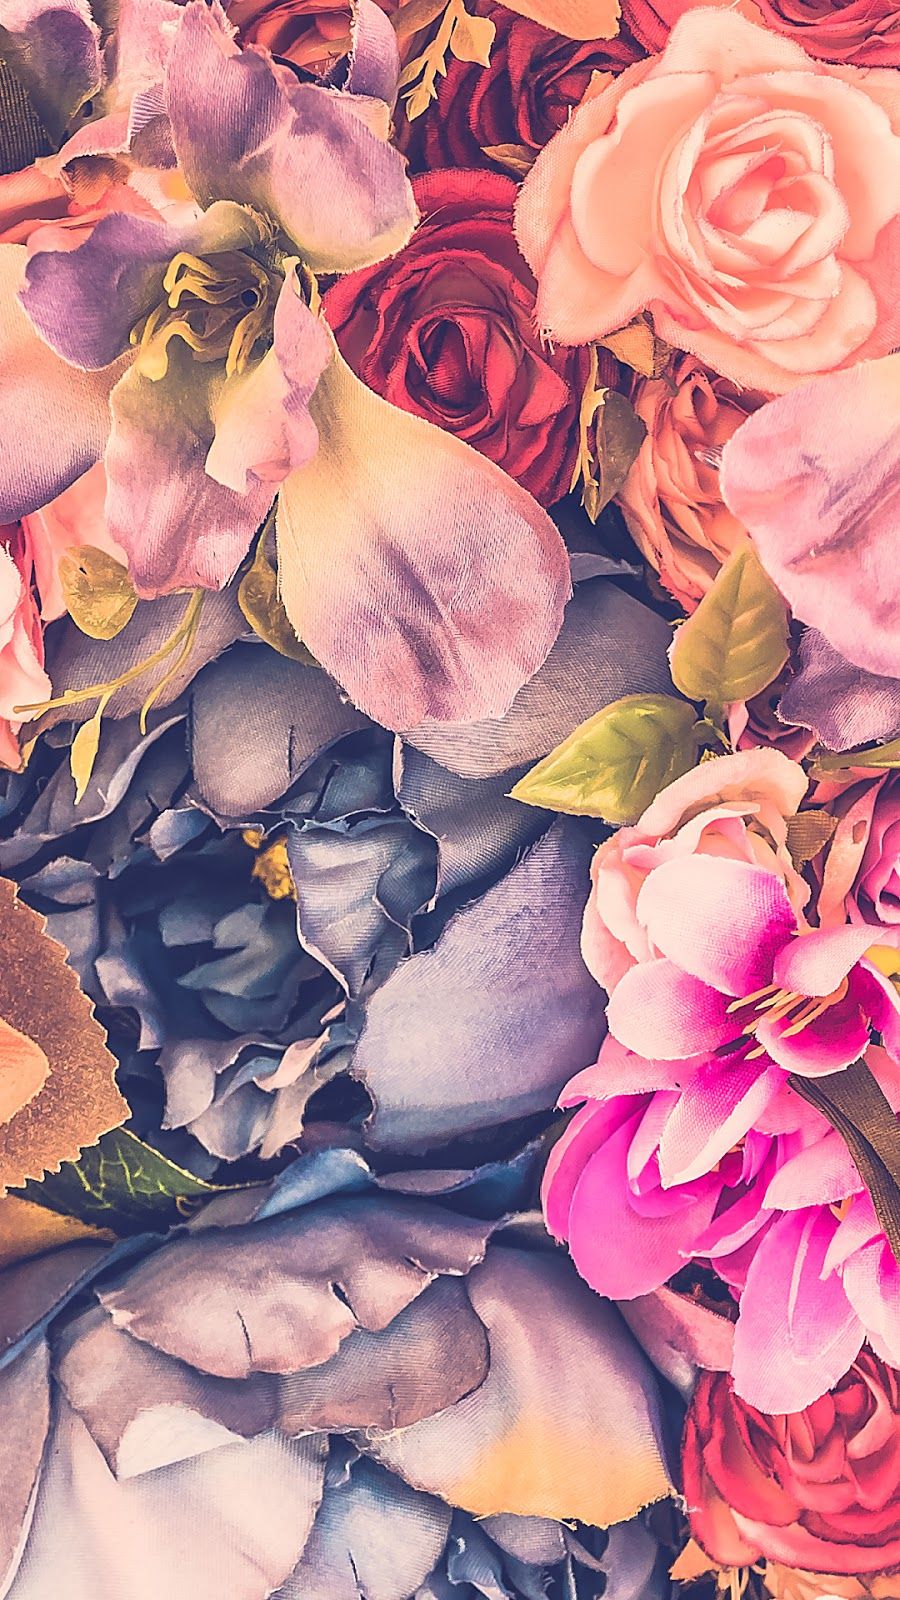 Real Dark Floral iPhone Wallpapers  Top Free Real Dark Floral iPhone  Backgrounds  Wallpa  White flower wallpaper Flower iphone wallpaper  Best flower wallpaper